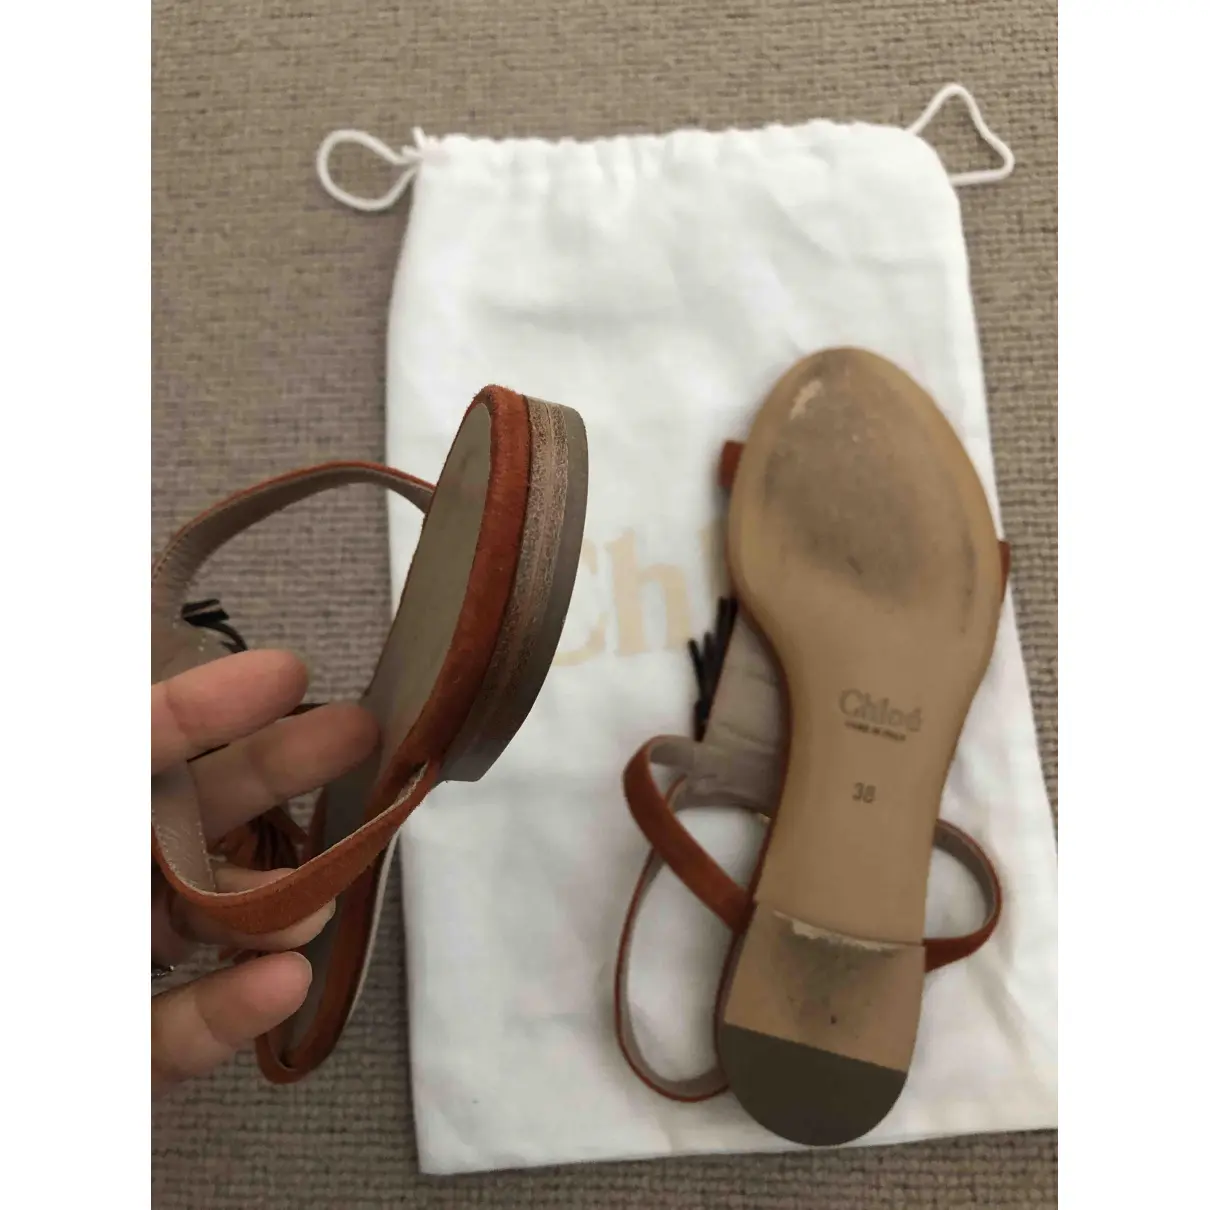 Buy Chloé Sandals online